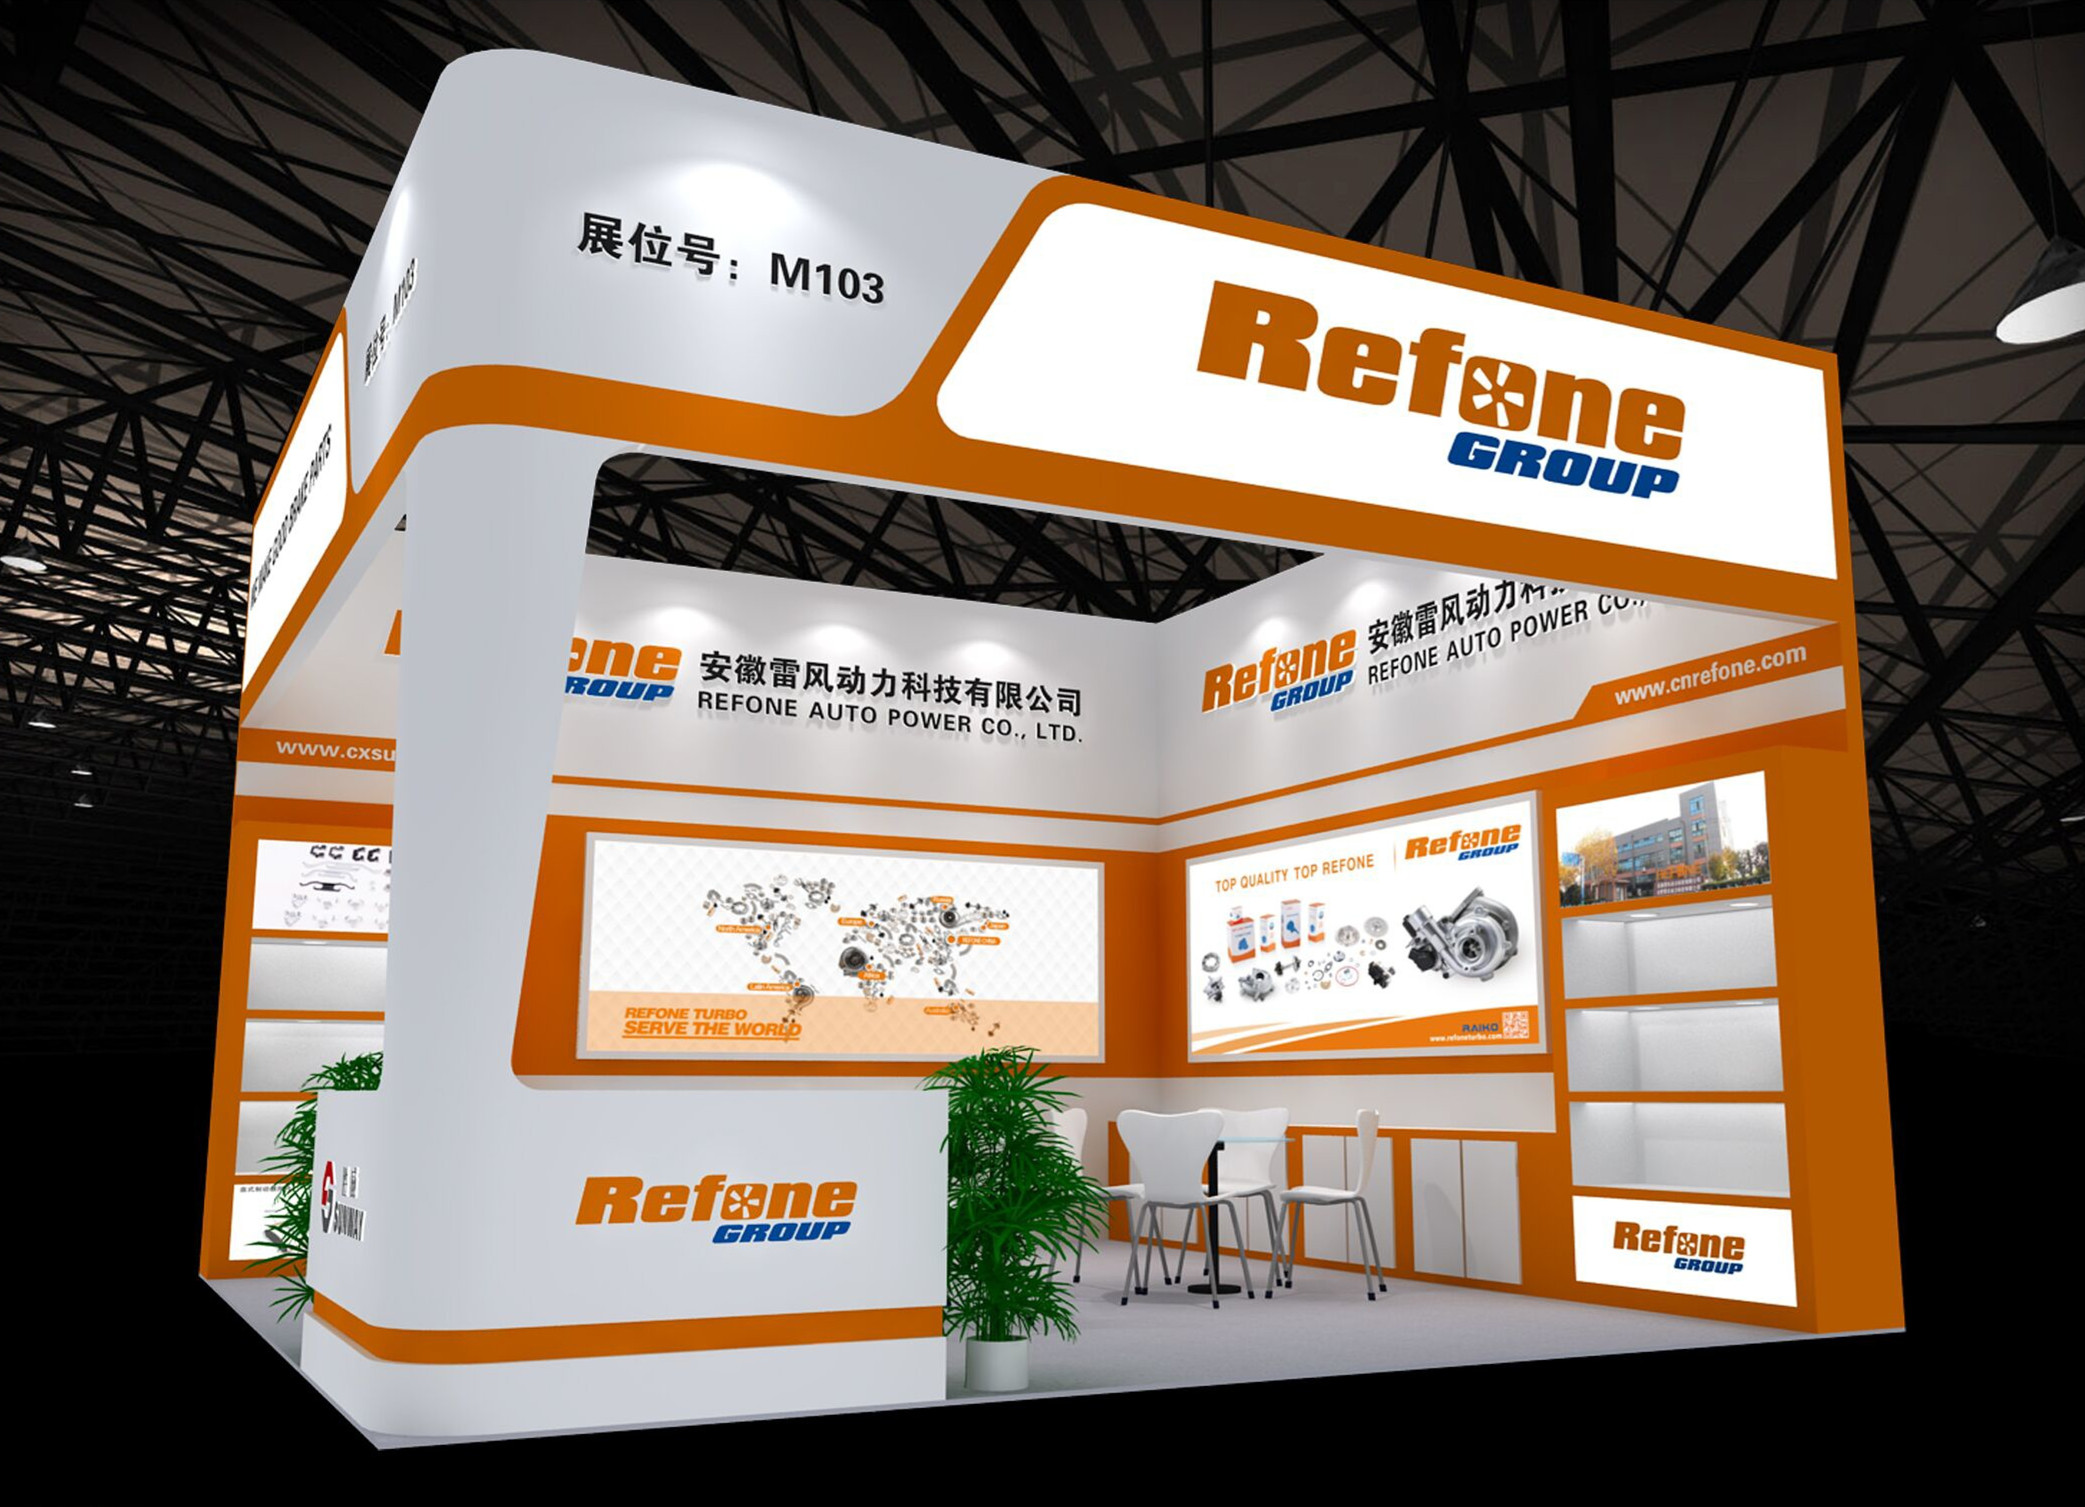 refone group limited asistirá a automechanika shanghai 2019